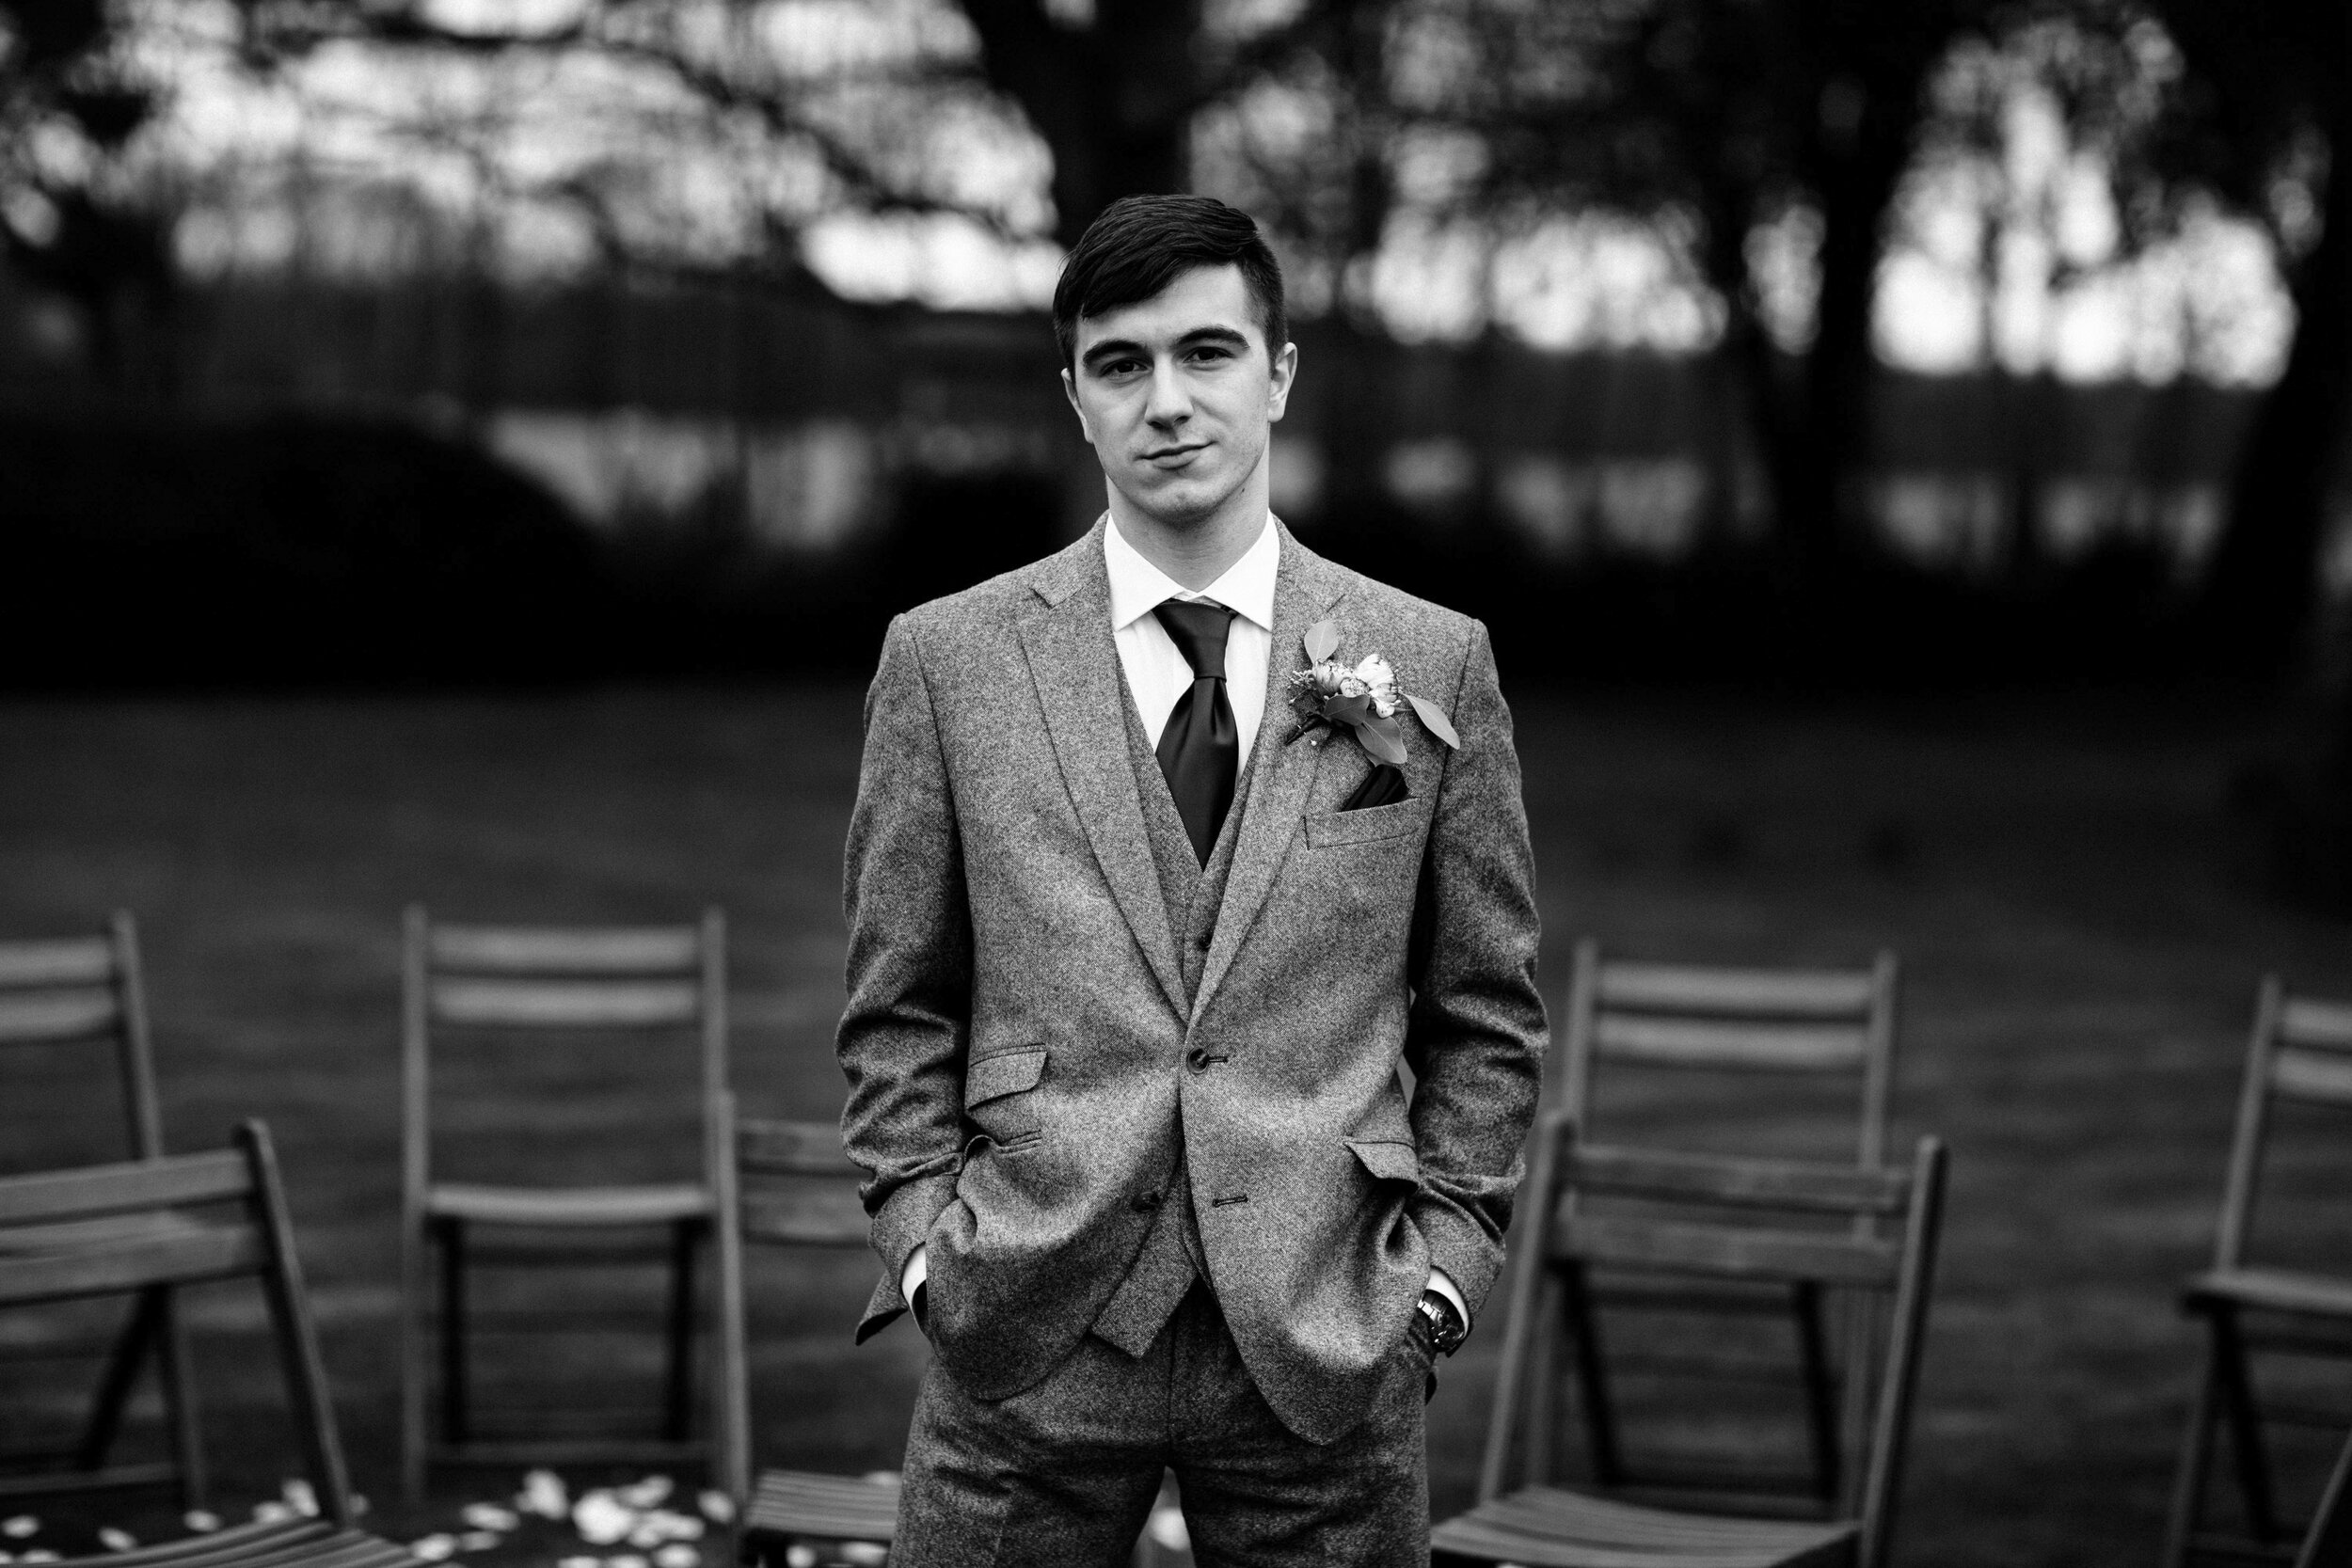 Kingsdown Rectory wedding photographer (c) Michael Newington Gray-31.jpg